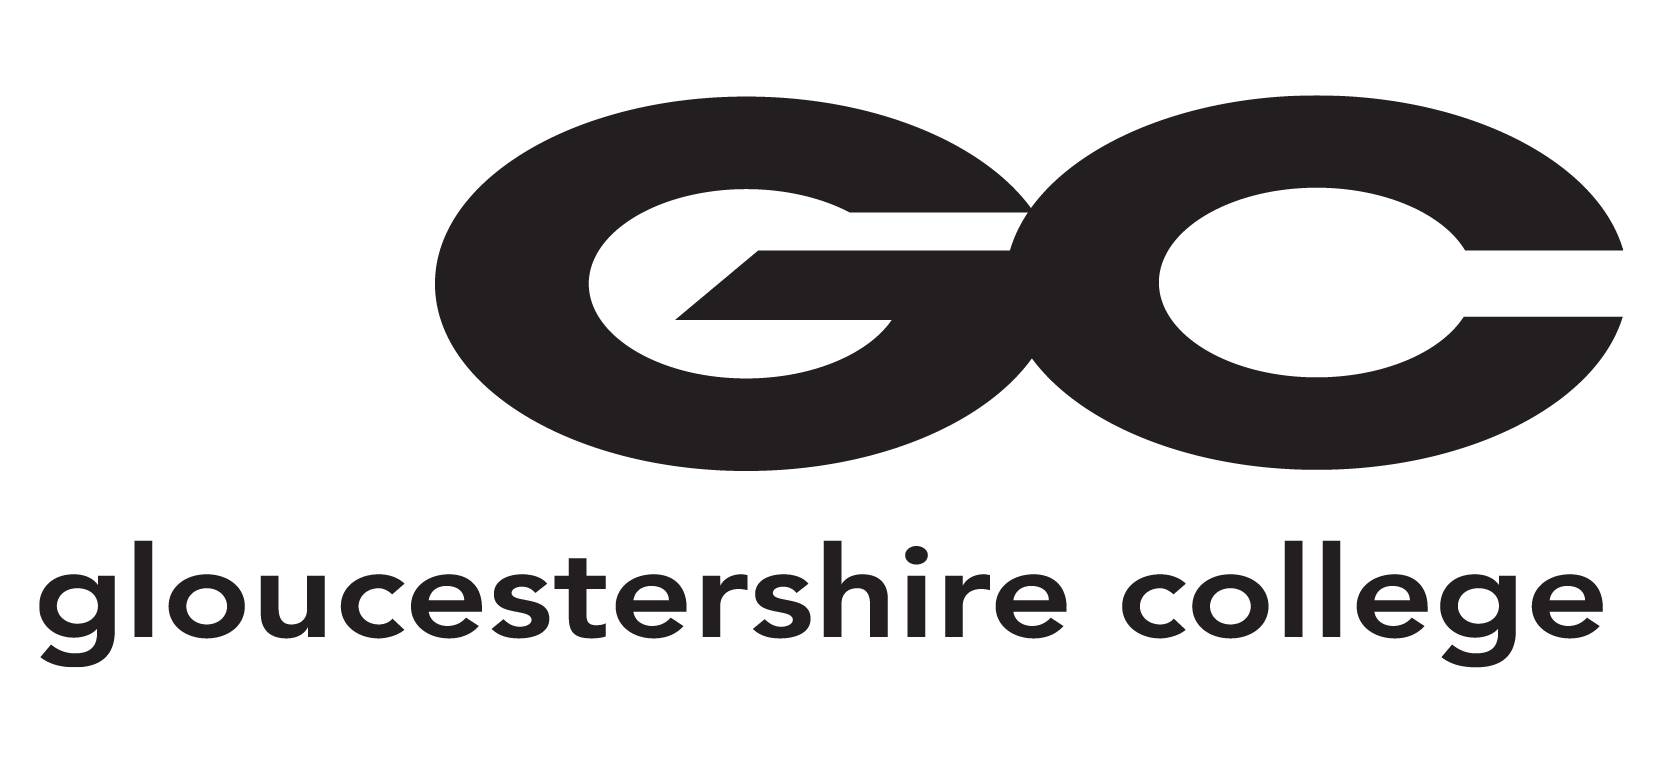 Gloucestershire college logo